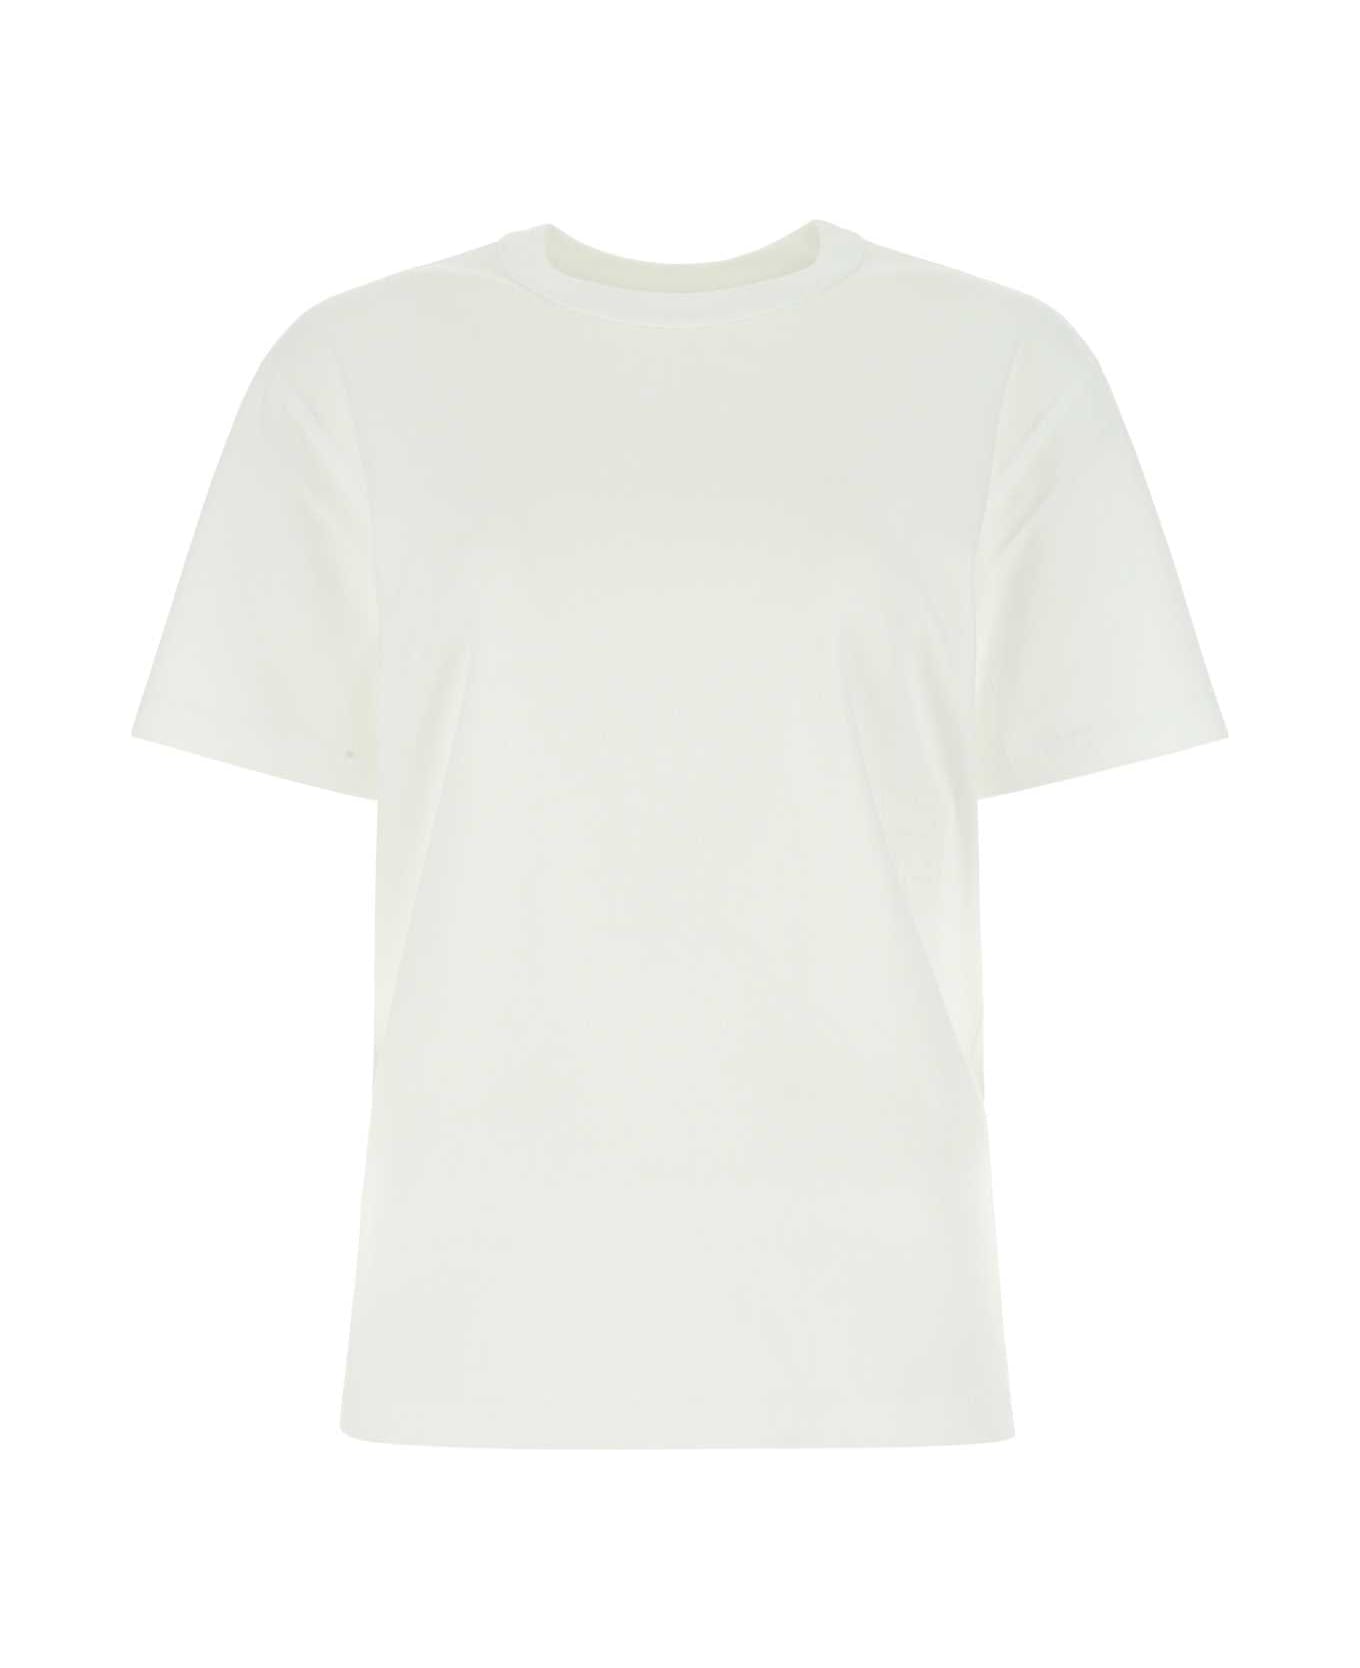 T by Alexander Wang White Cotton Oversize T-shirt - 100